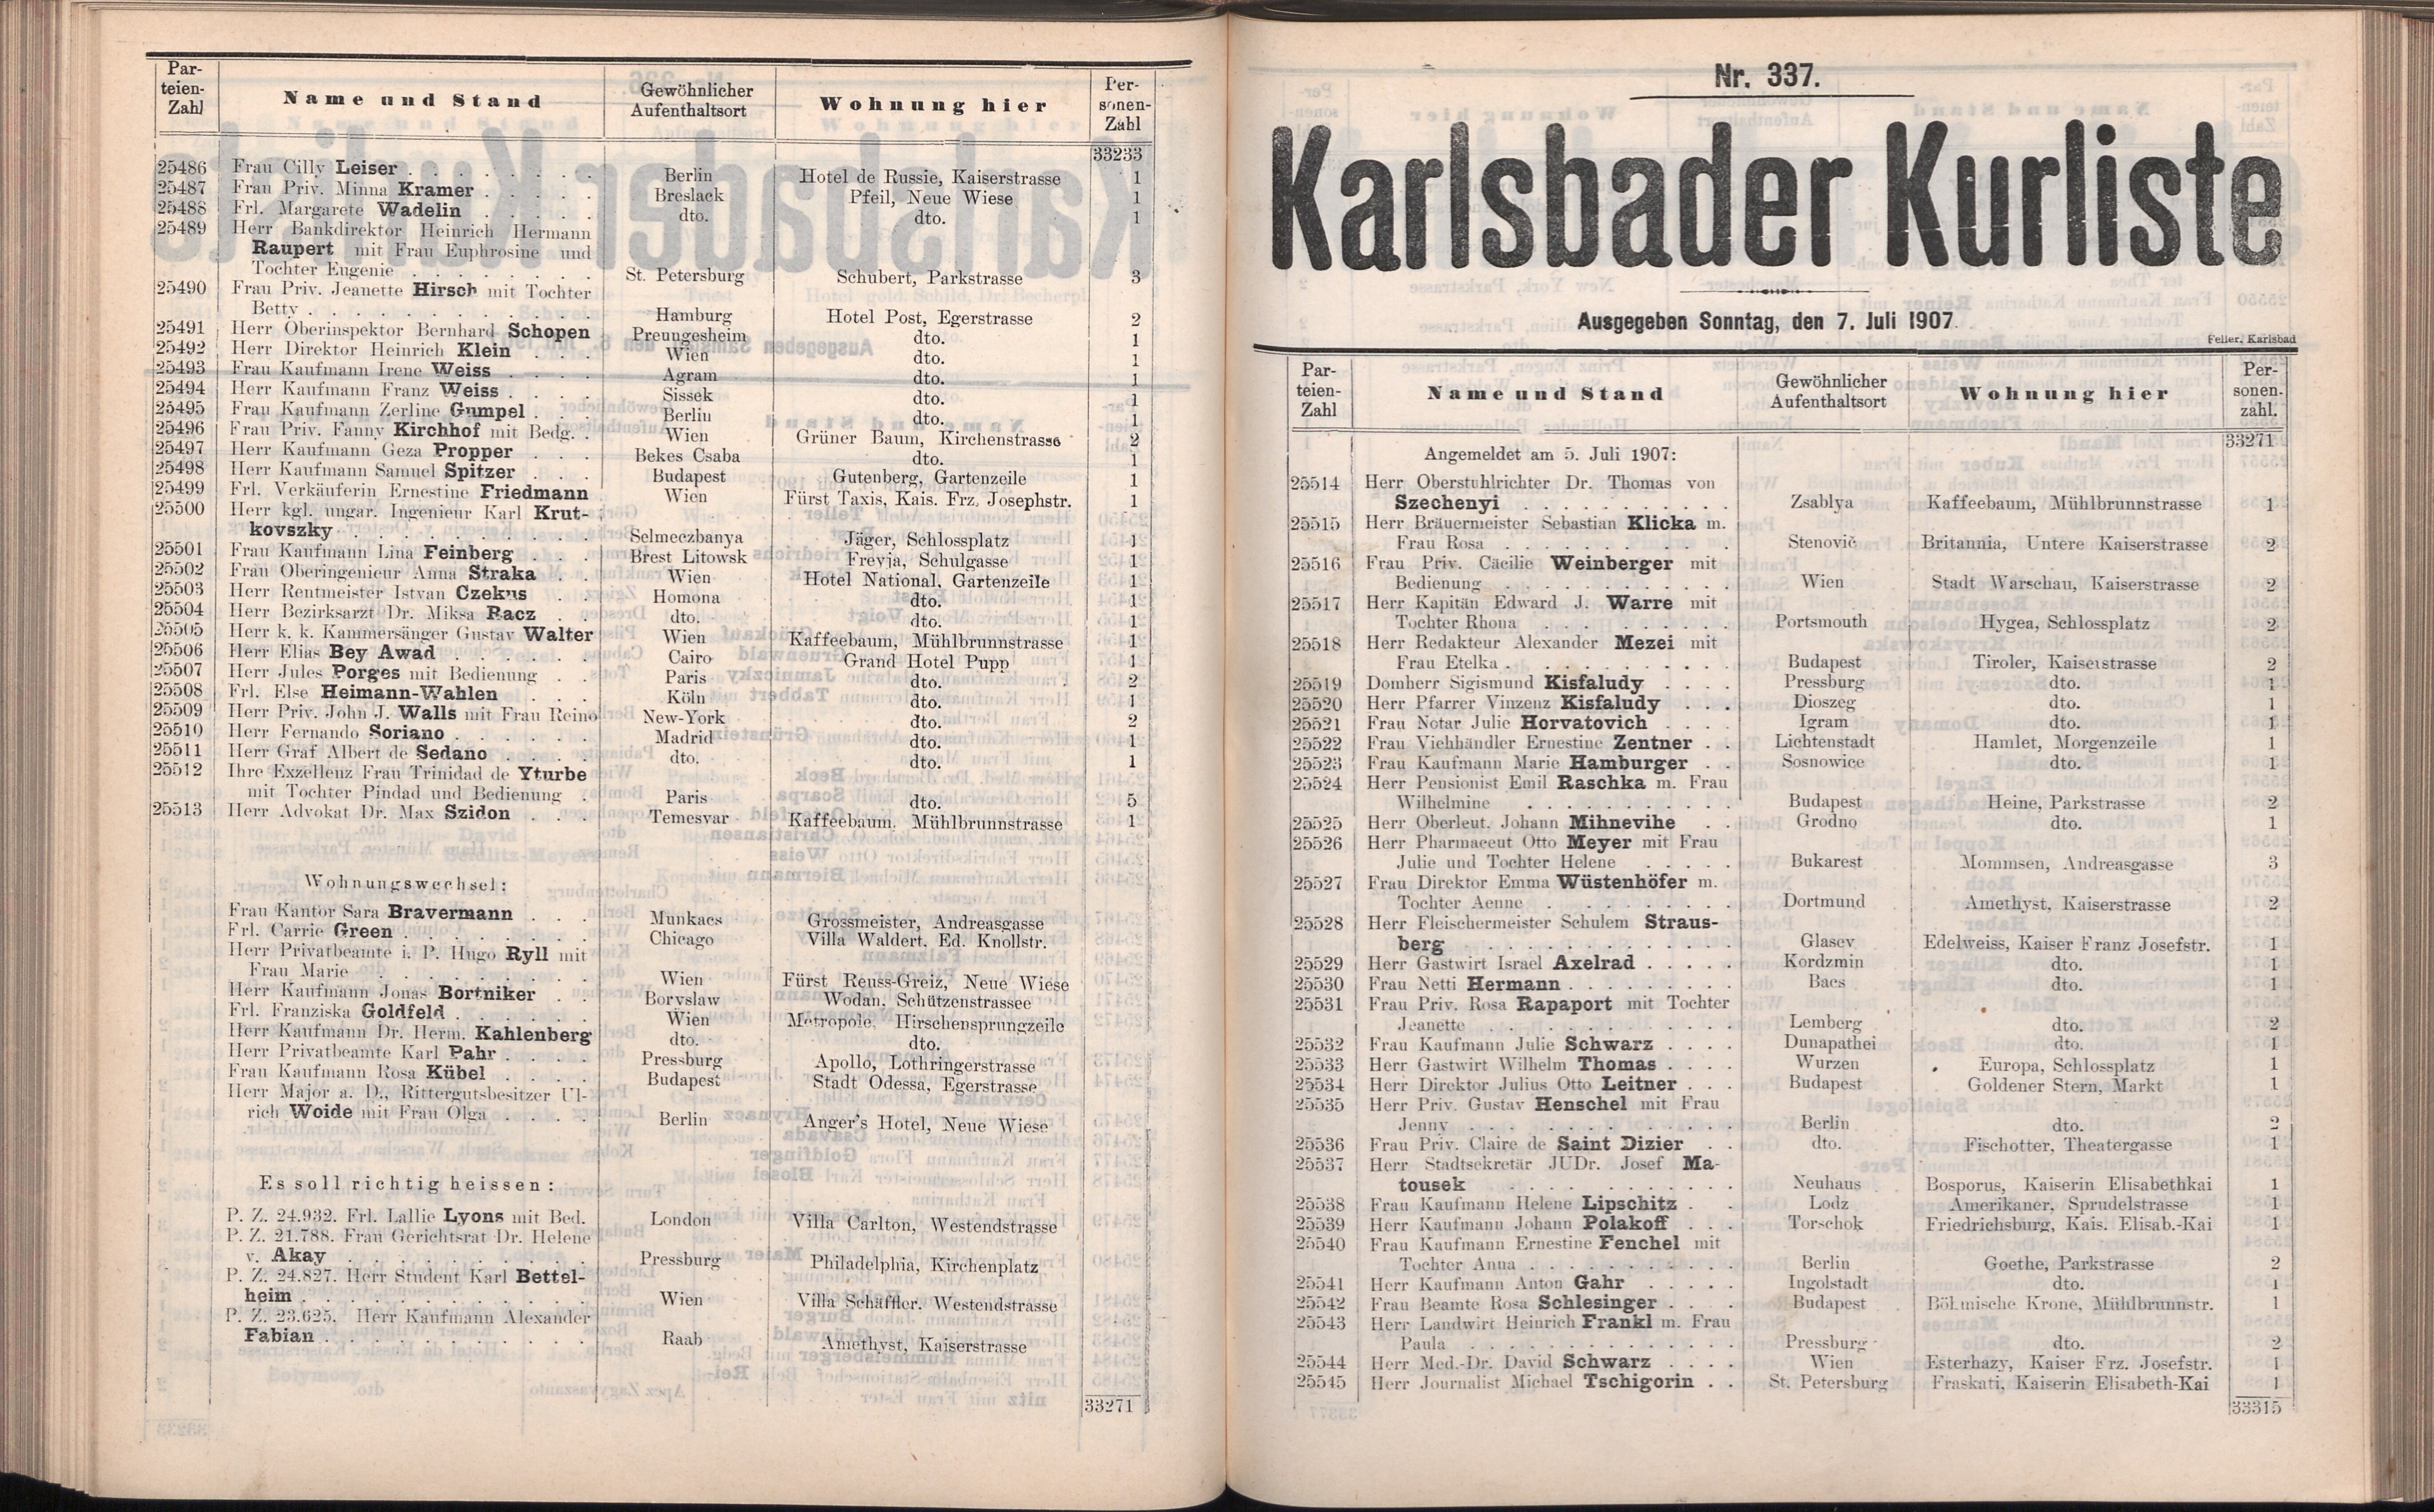 451. soap-kv_knihovna_karlsbader-kurliste-1907_4520